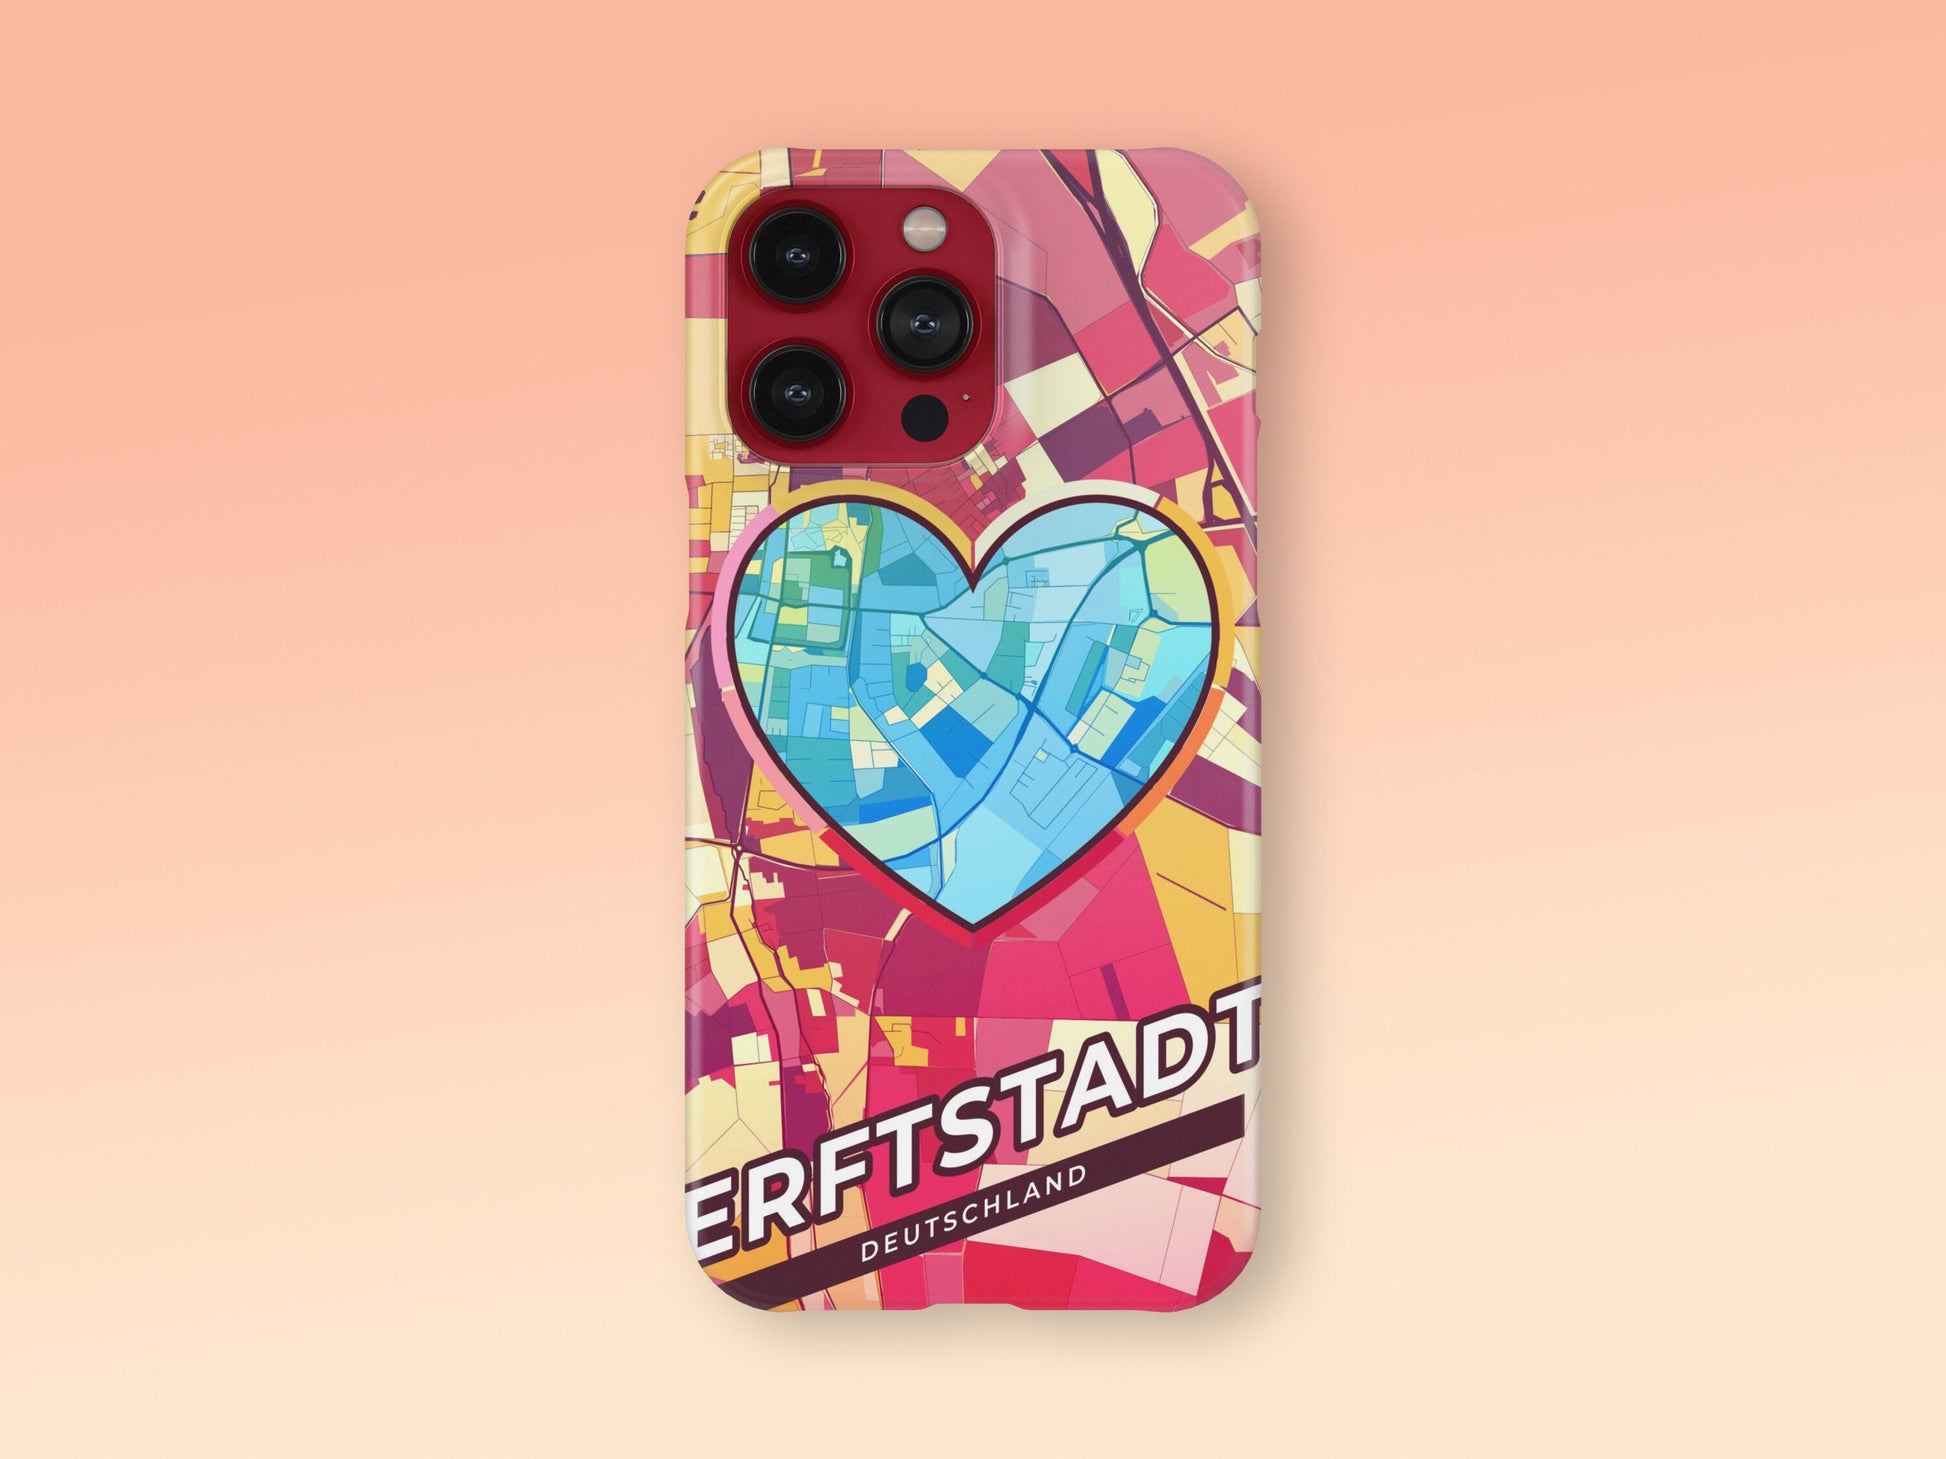 Erftstadt Deutschland slim phone case with colorful icon. Birthday, wedding or housewarming gift. Couple match cases. 2